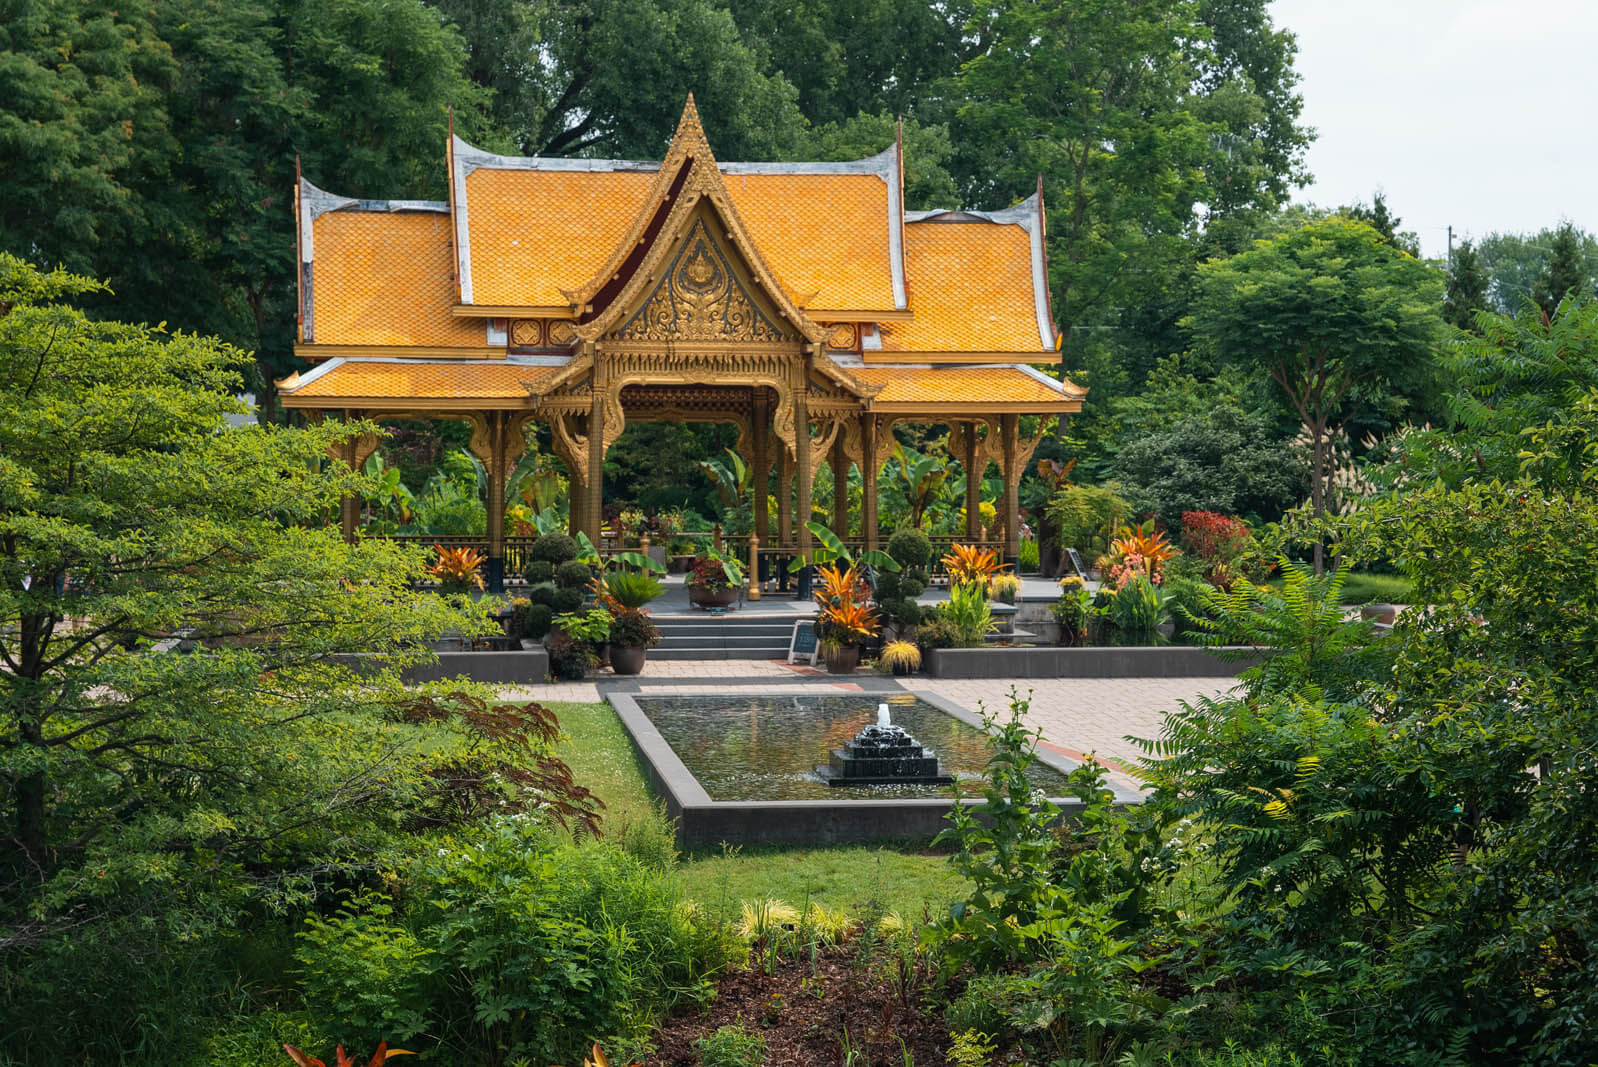 The Thai Pavilion at Olbrich Botanical Gardens in Madison